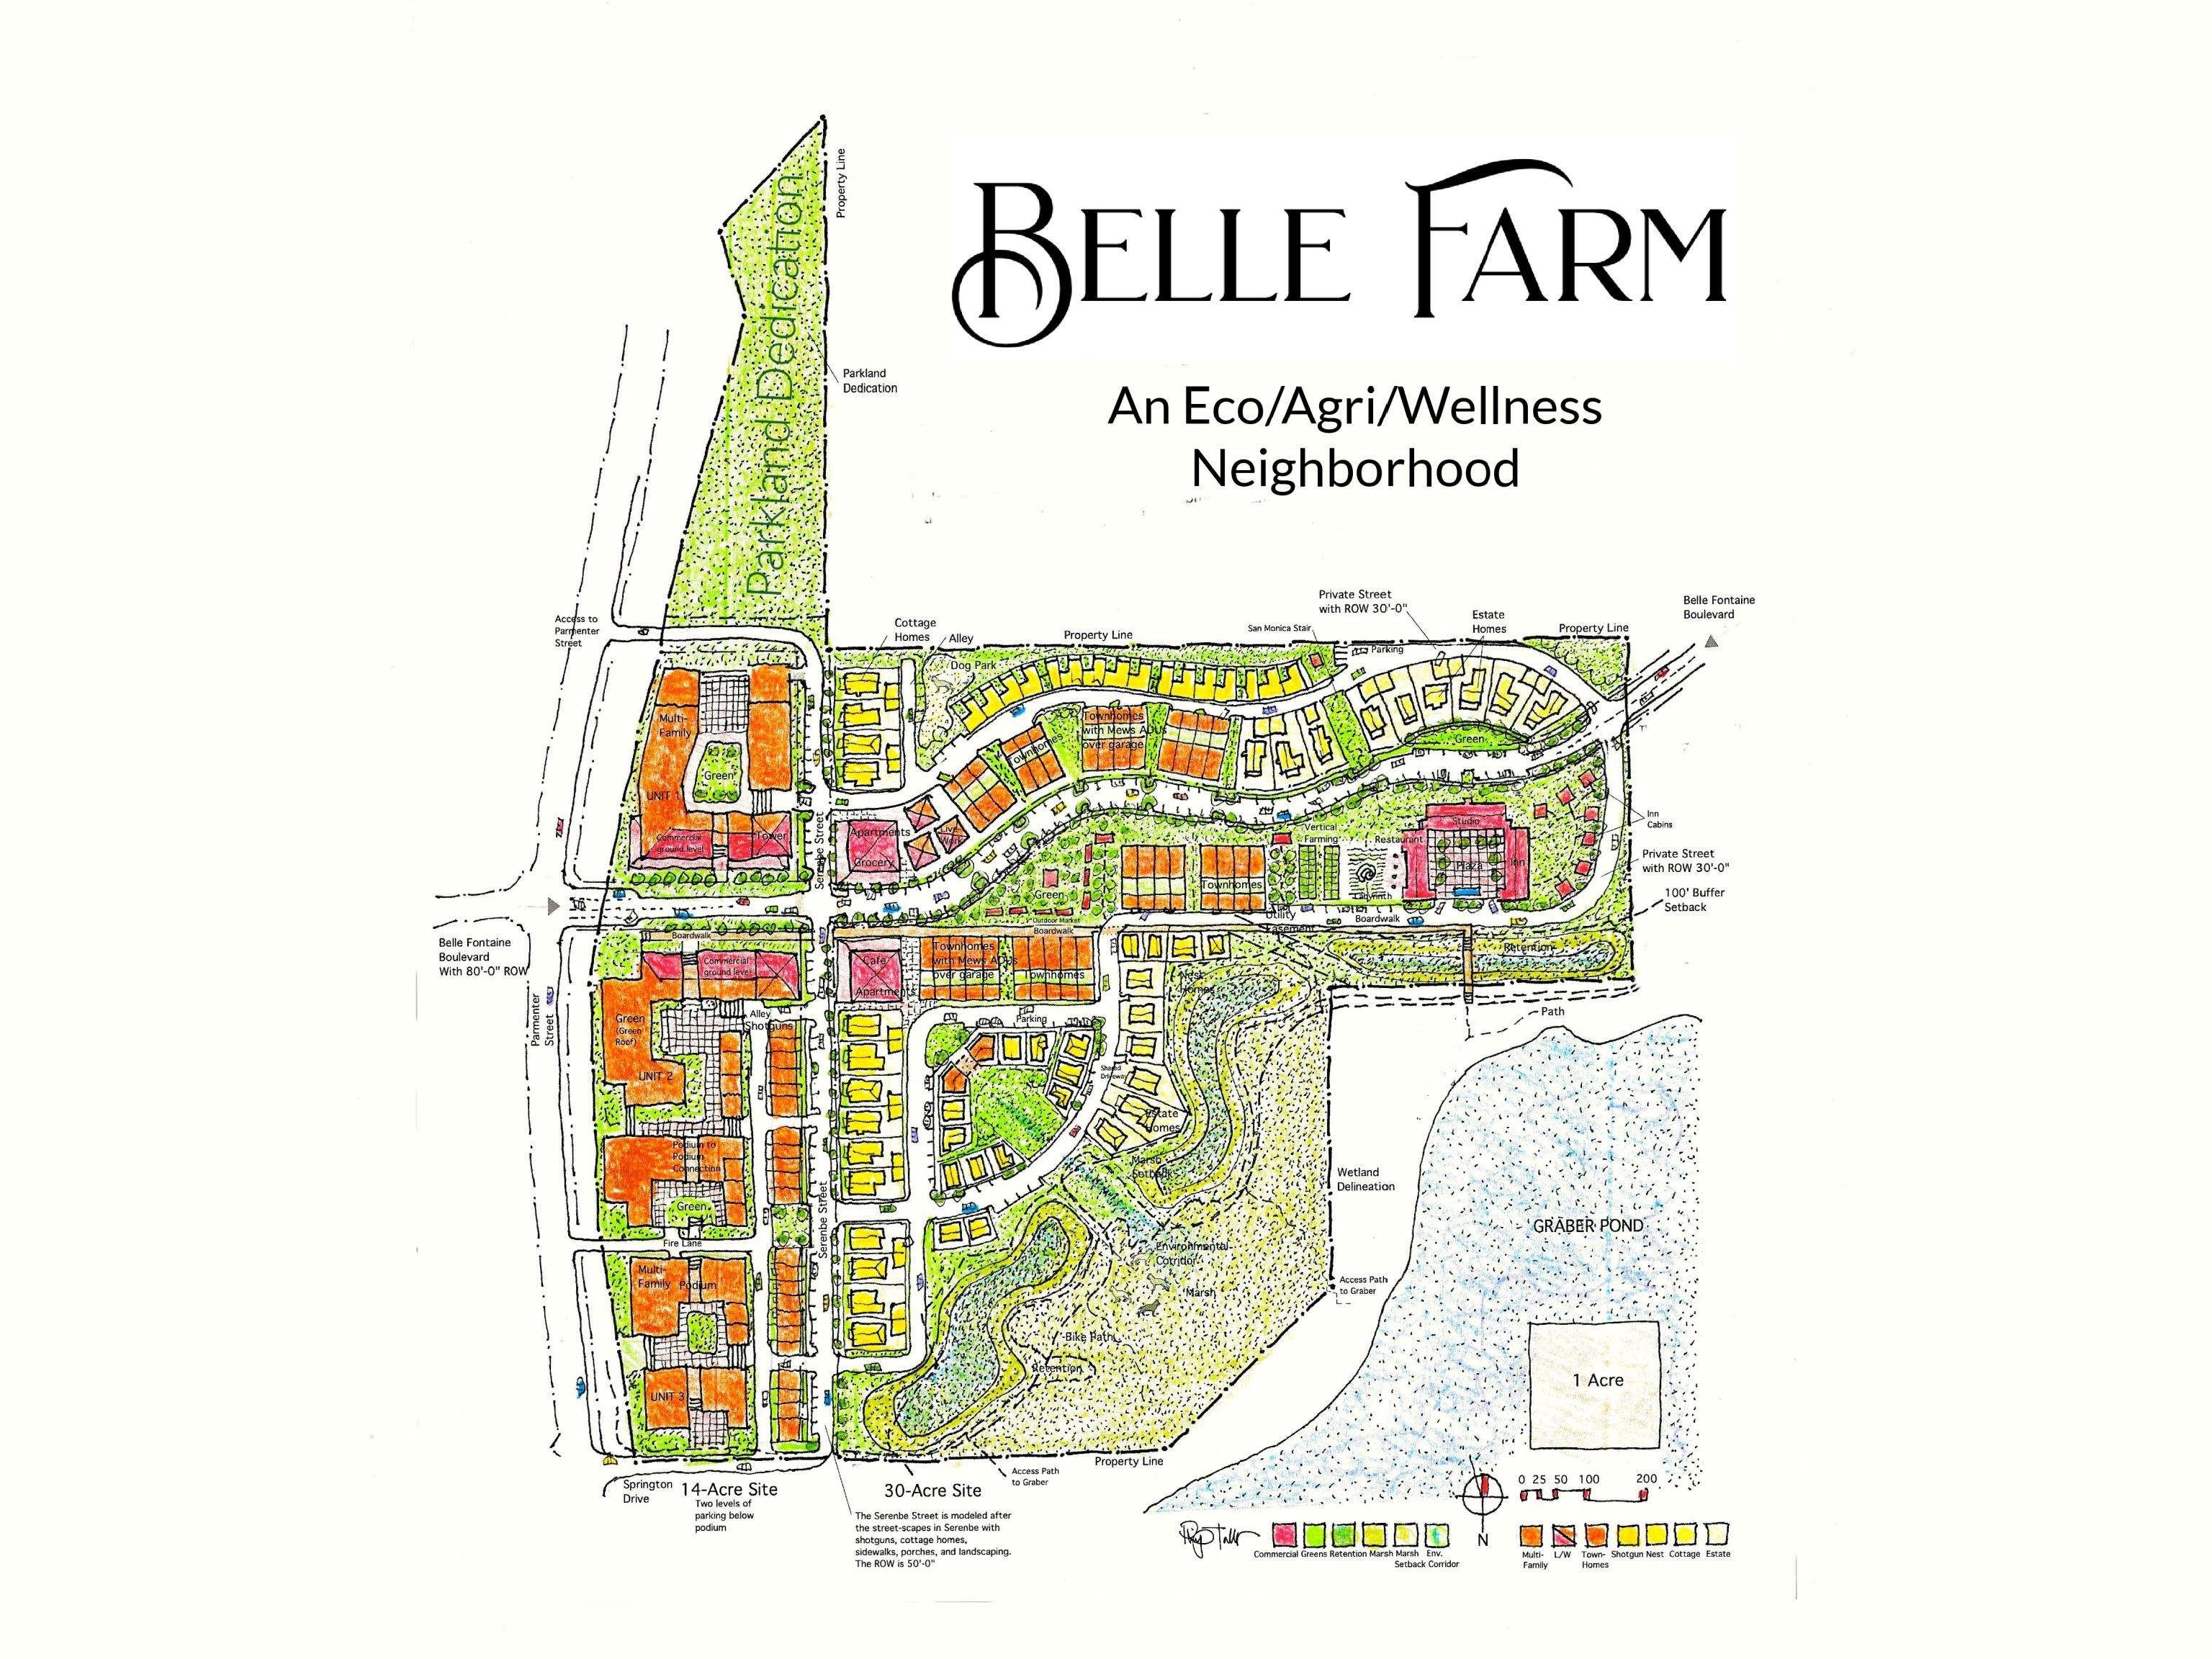 2. Lot 25 Belle Farm